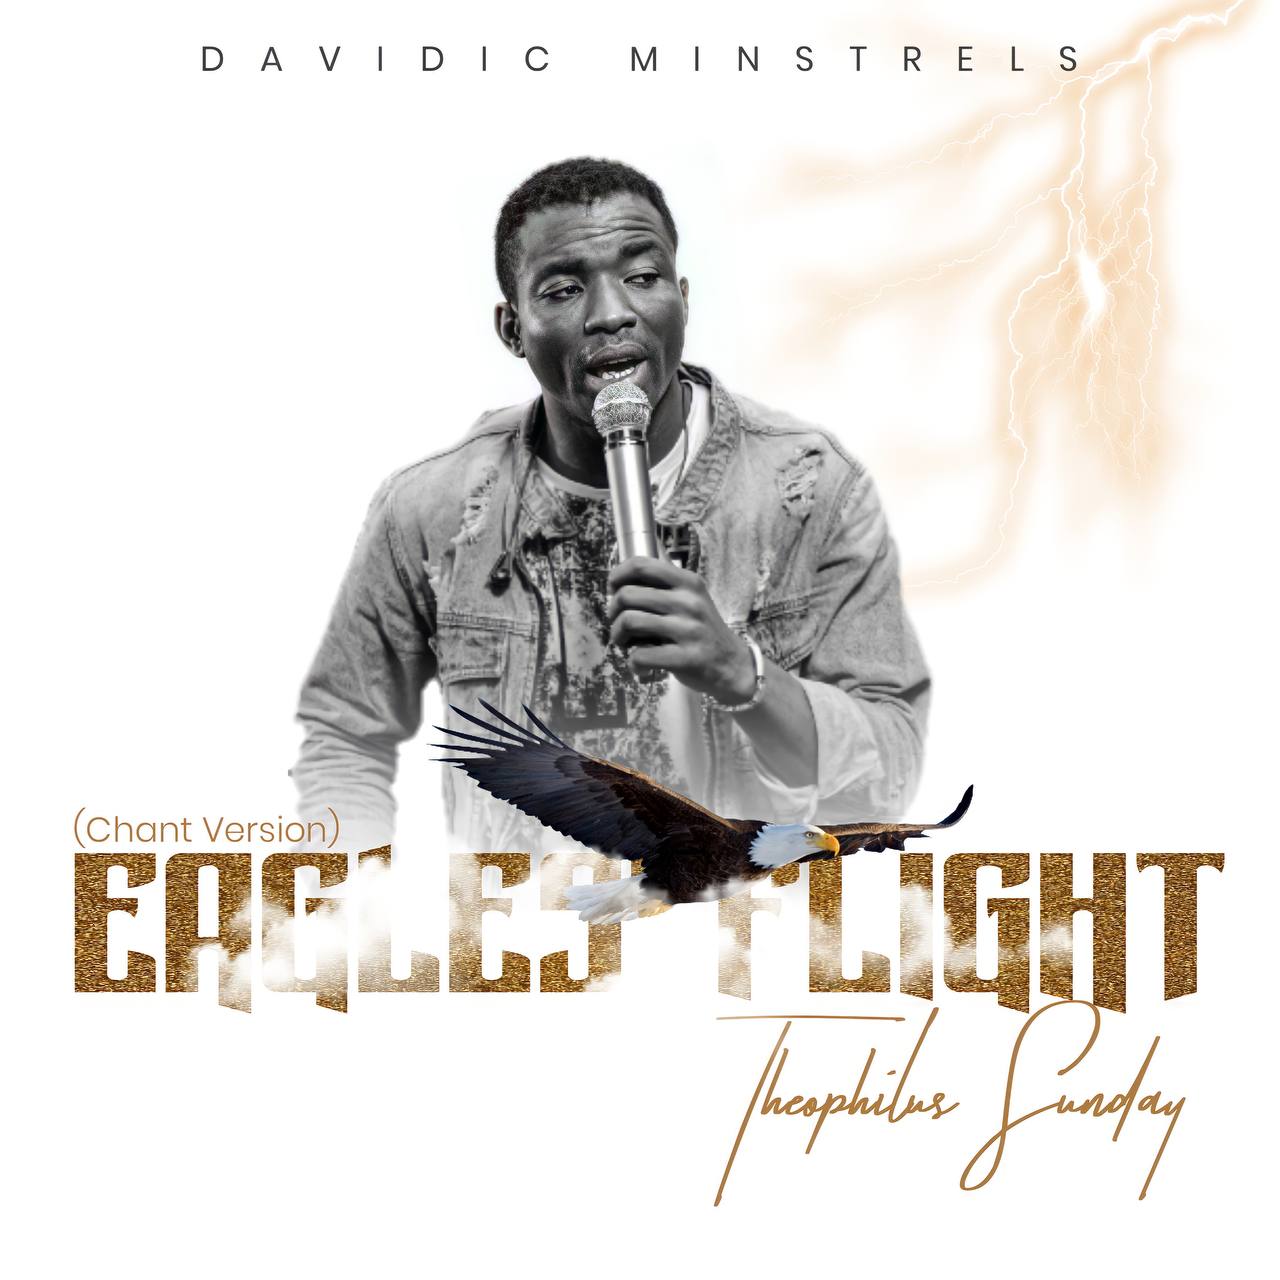 EAGLES FLIGHT Theophilus Sunday Mp3 Download Free (Audio+Lyrics) 1